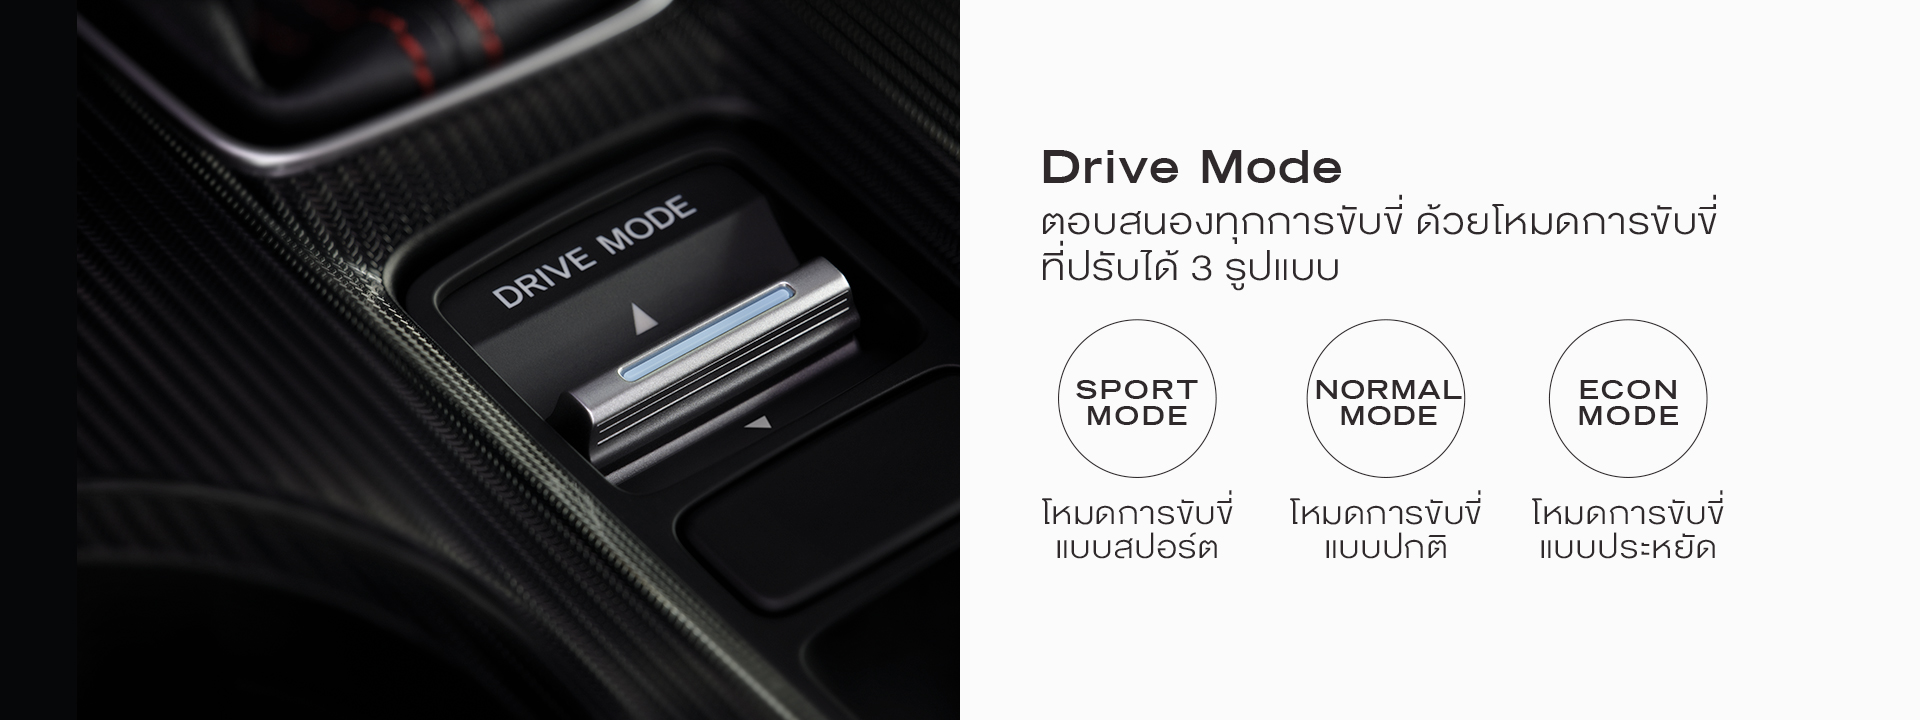 Honda Civic e:HEV drive modes